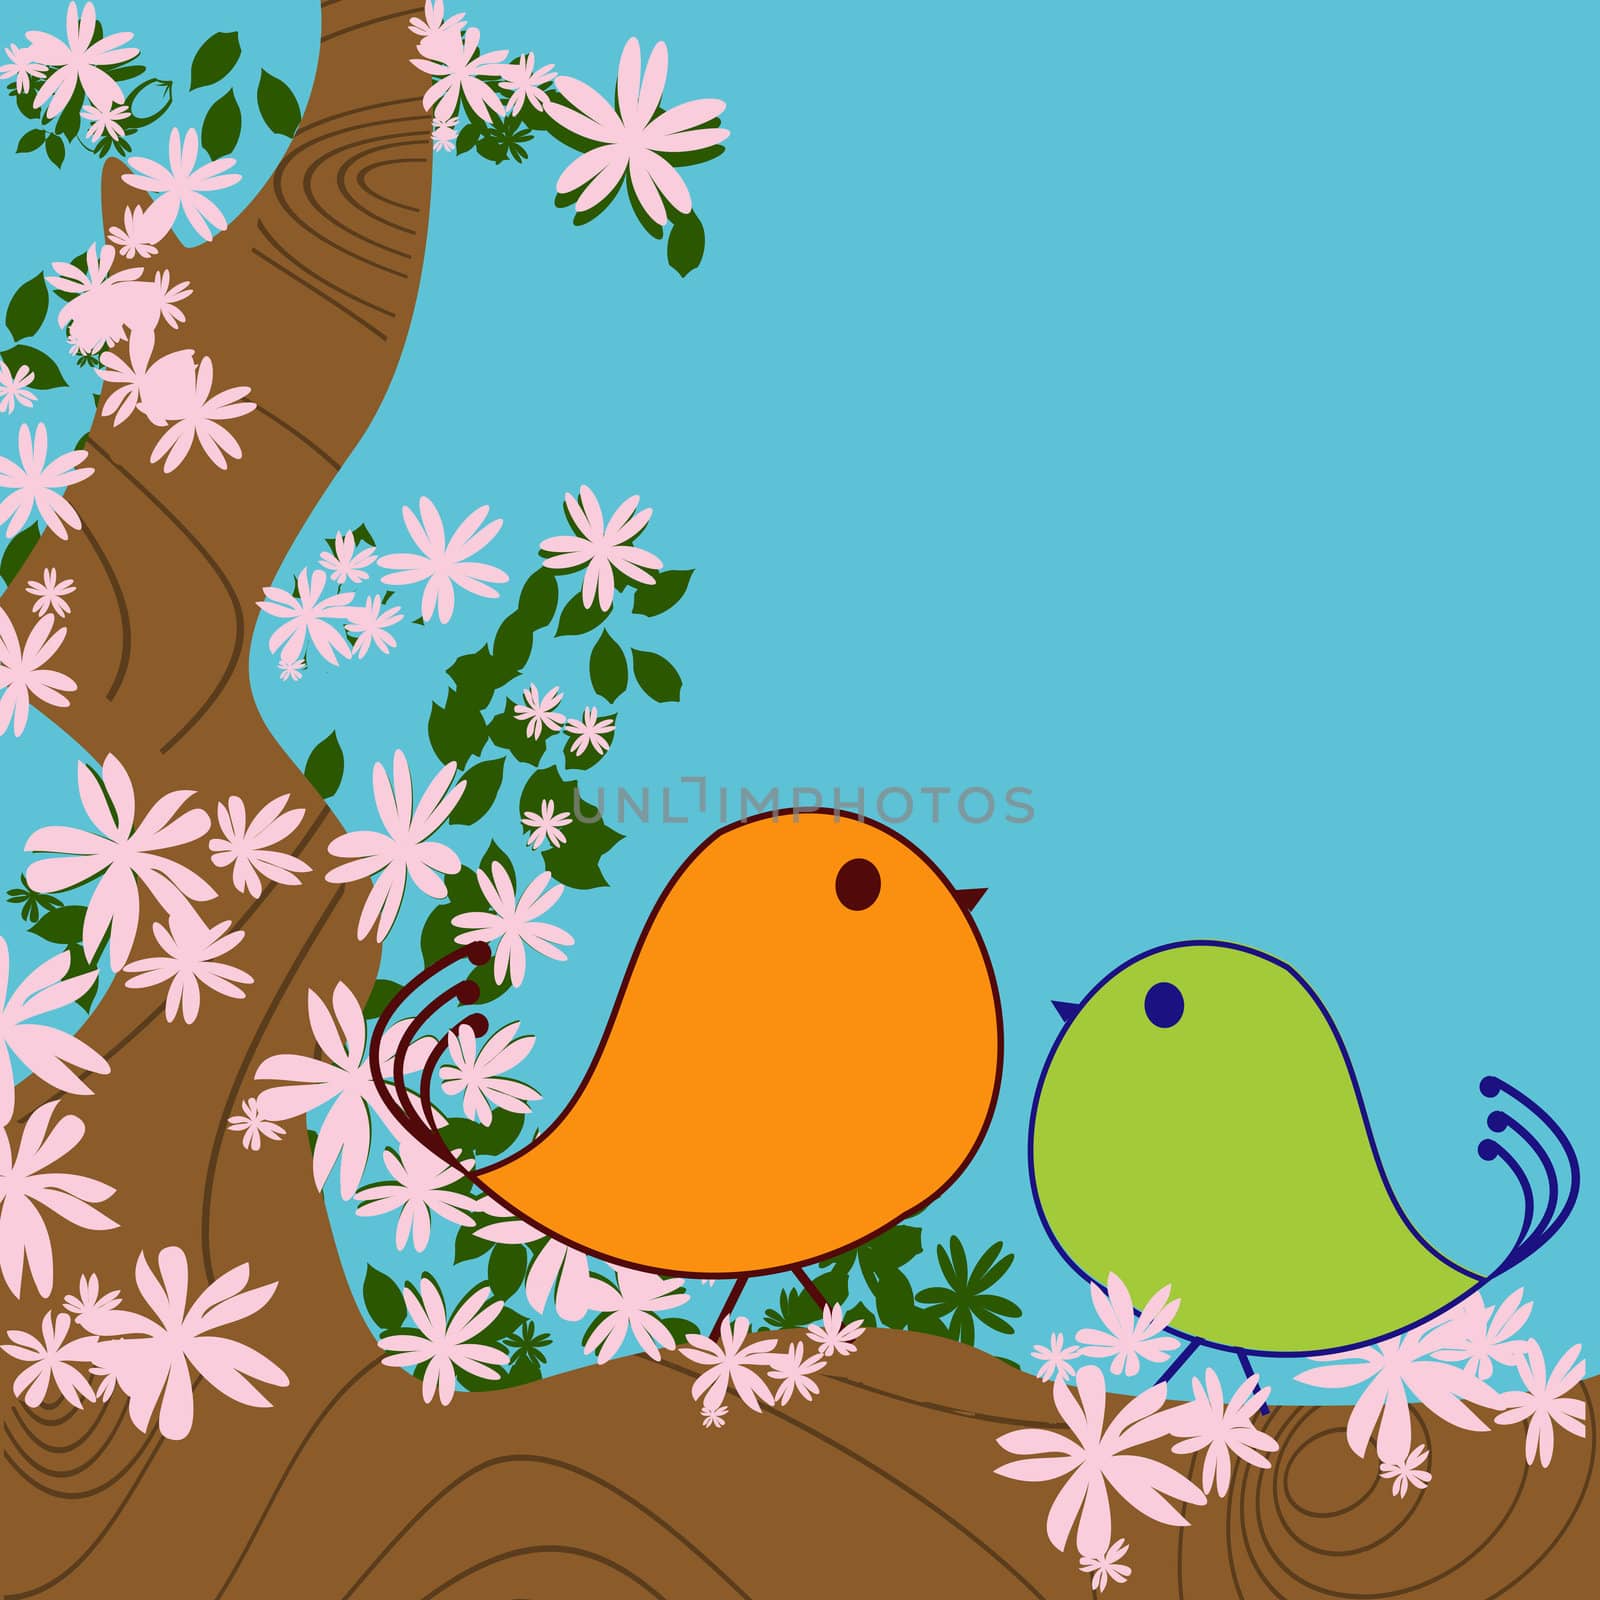 Love birds by Lirch